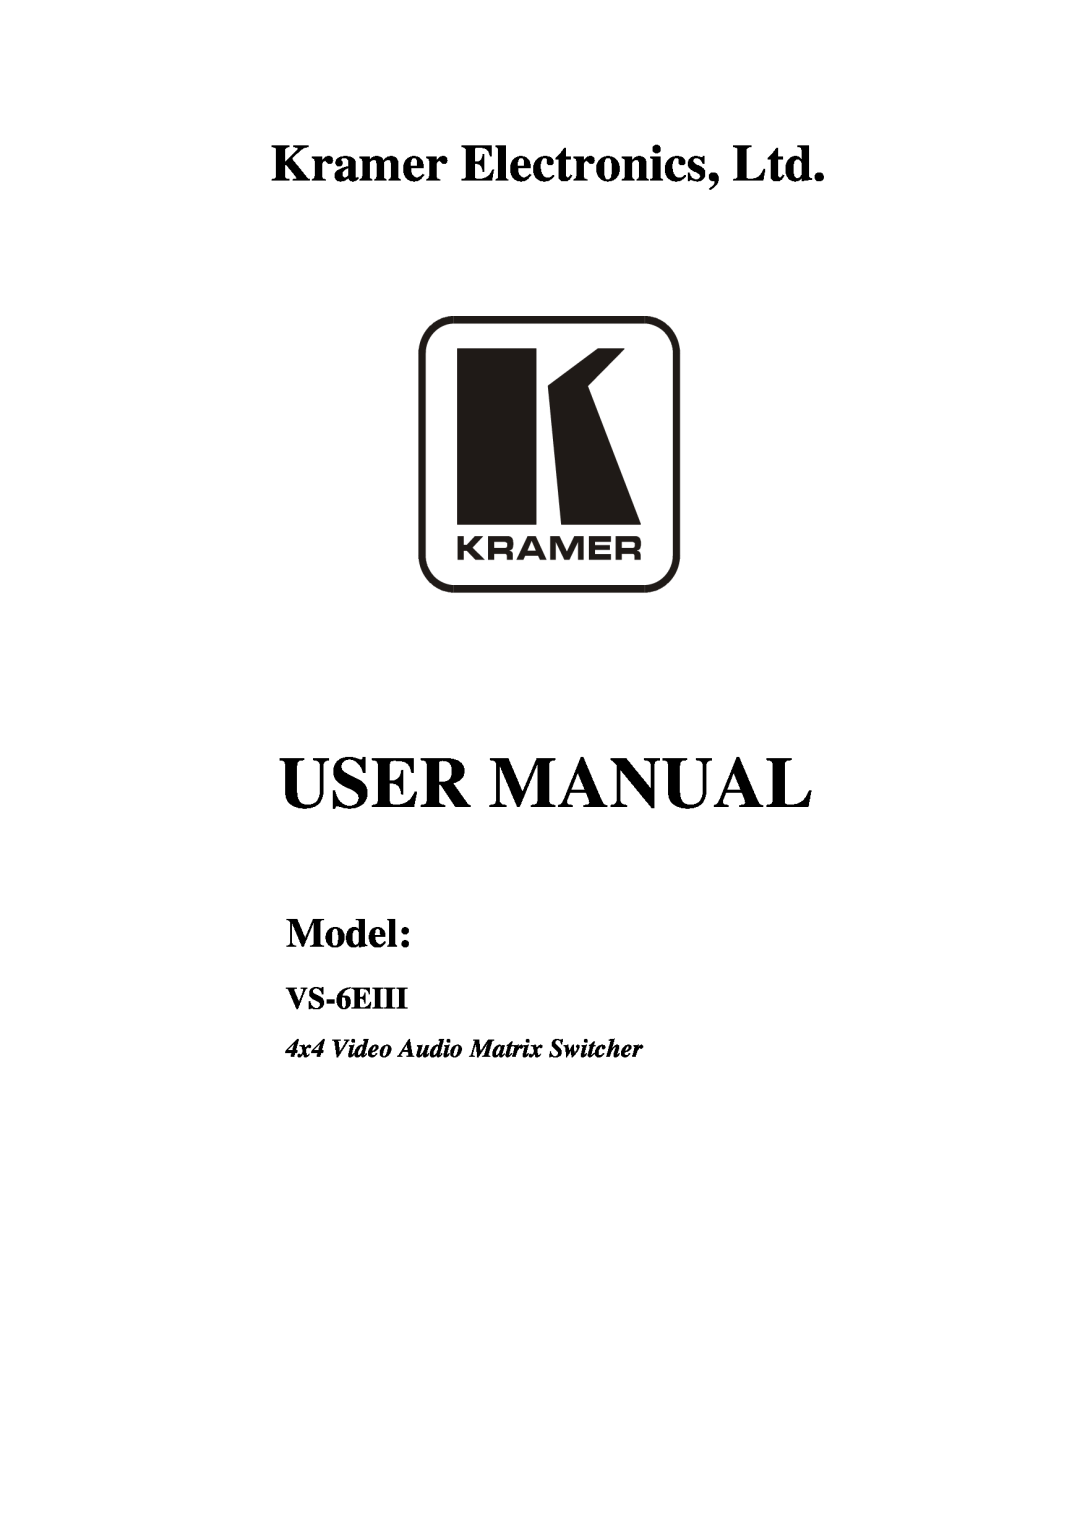 Kramer Electronics VS-6EIII user manual User Manual, Model, 4x4 Video Audio Matrix Switcher 